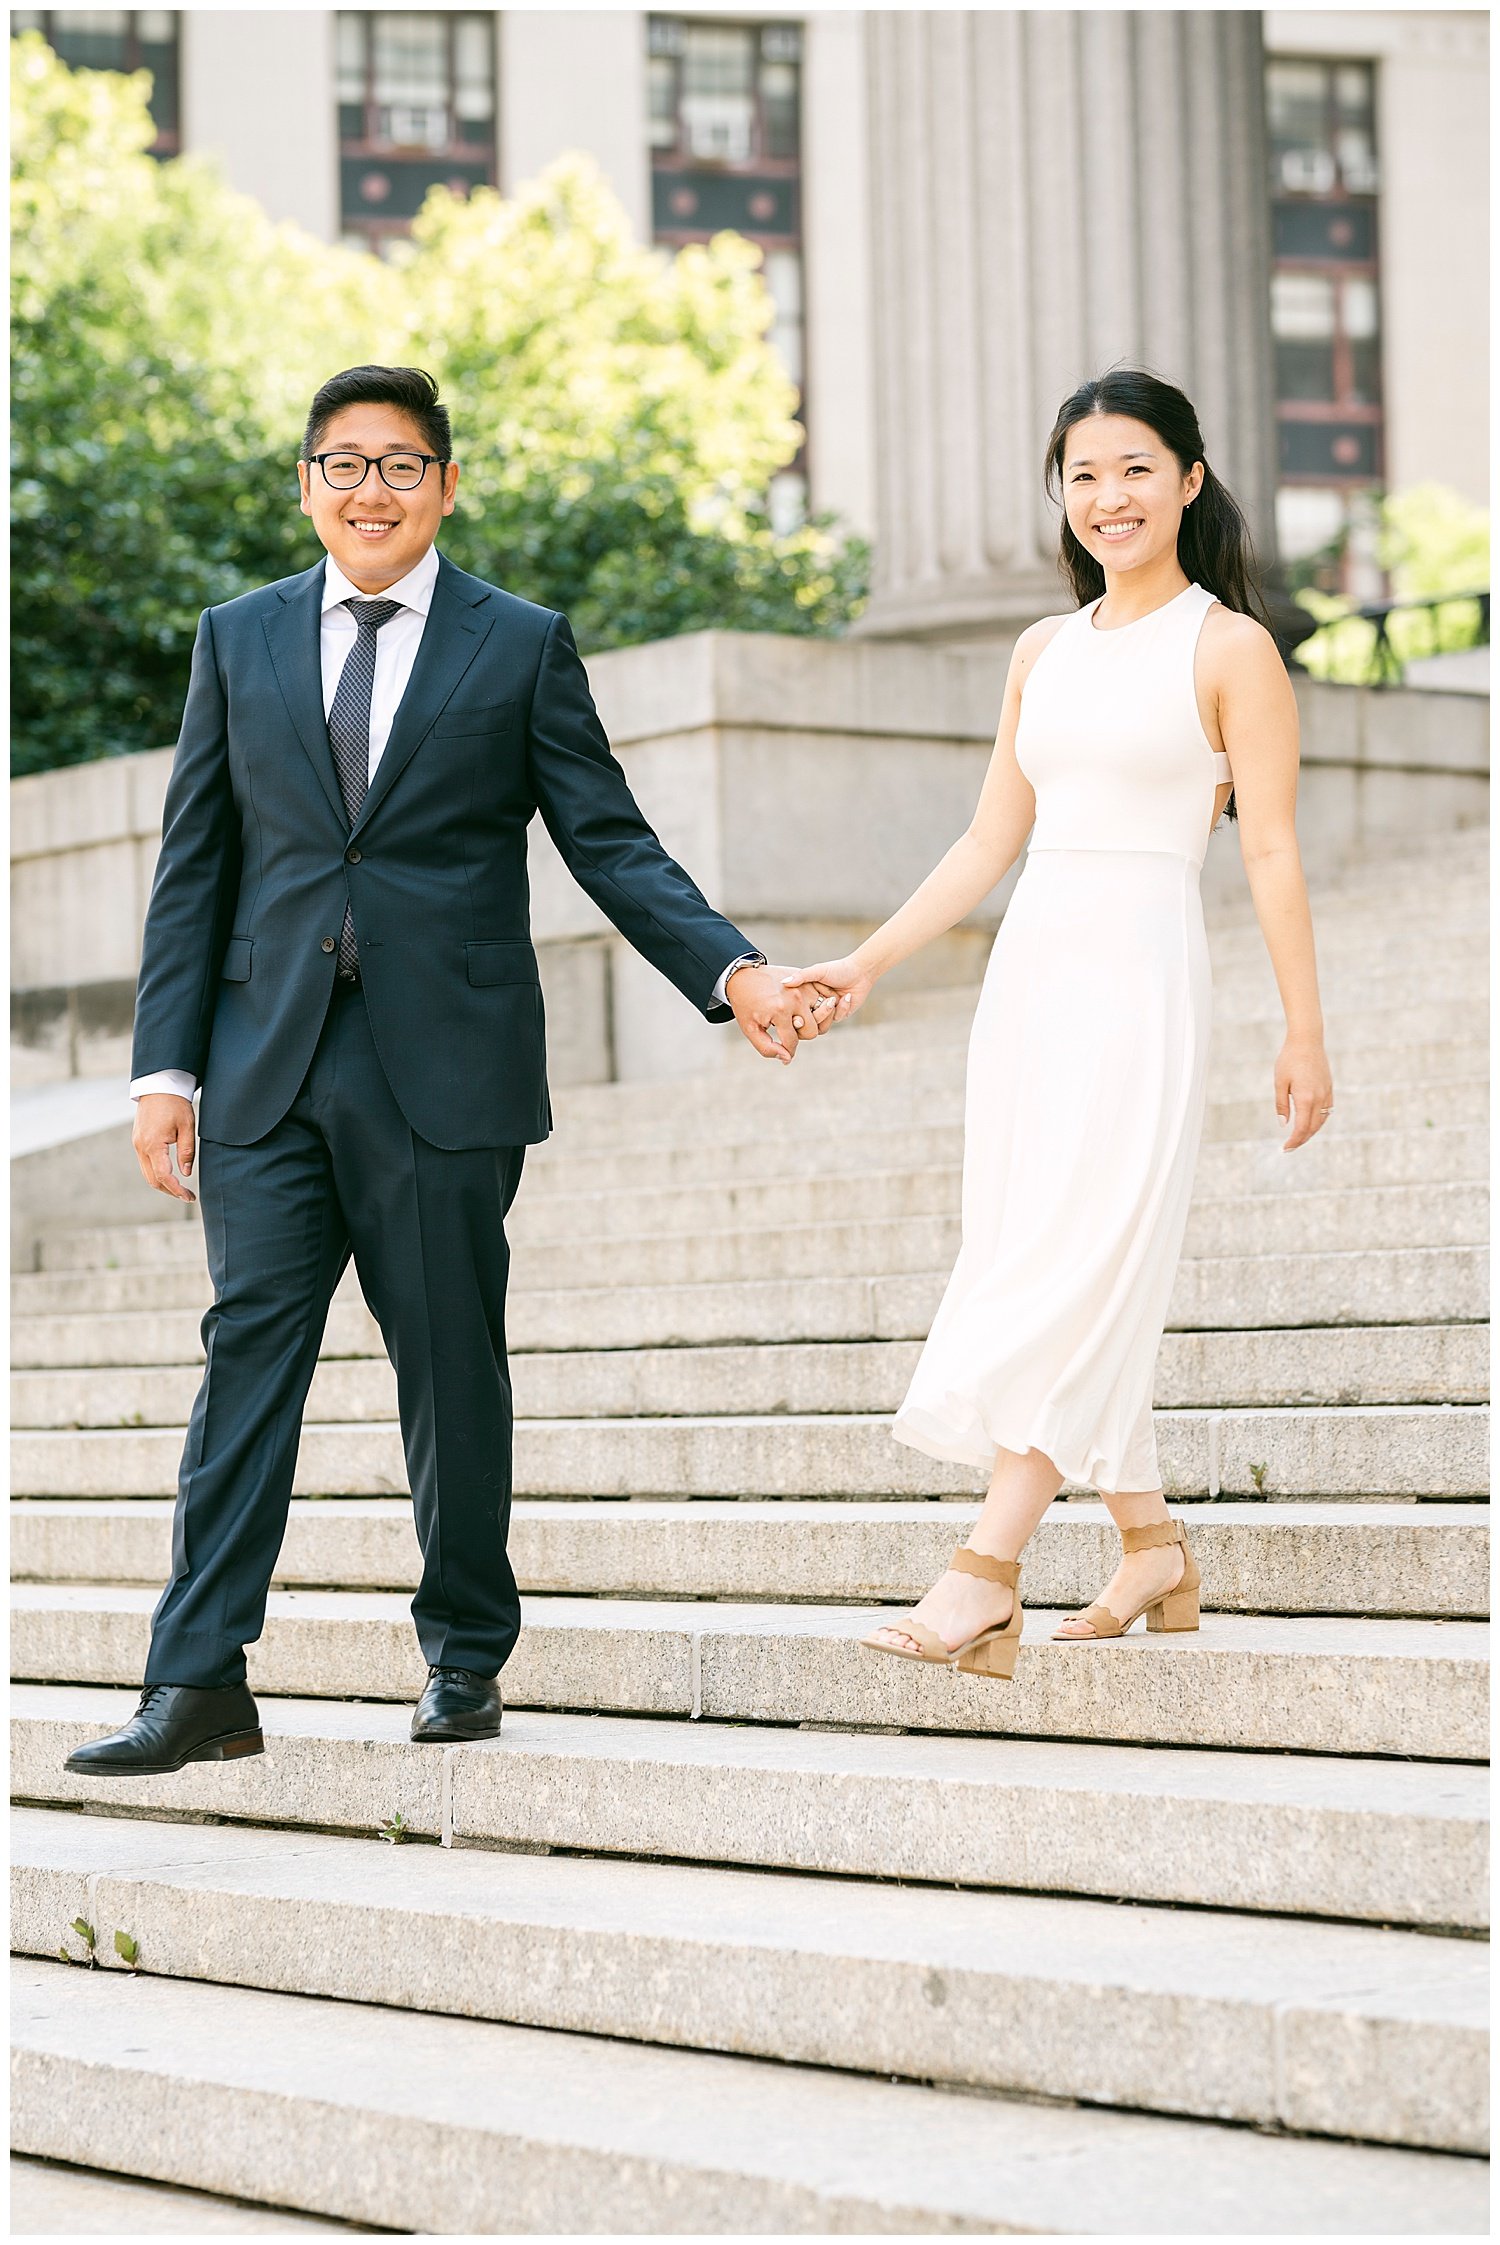 NYC-Marriage-Bureau-Elopement-Wedding-at-City-Hall-Apollo-Fields-10.jpg